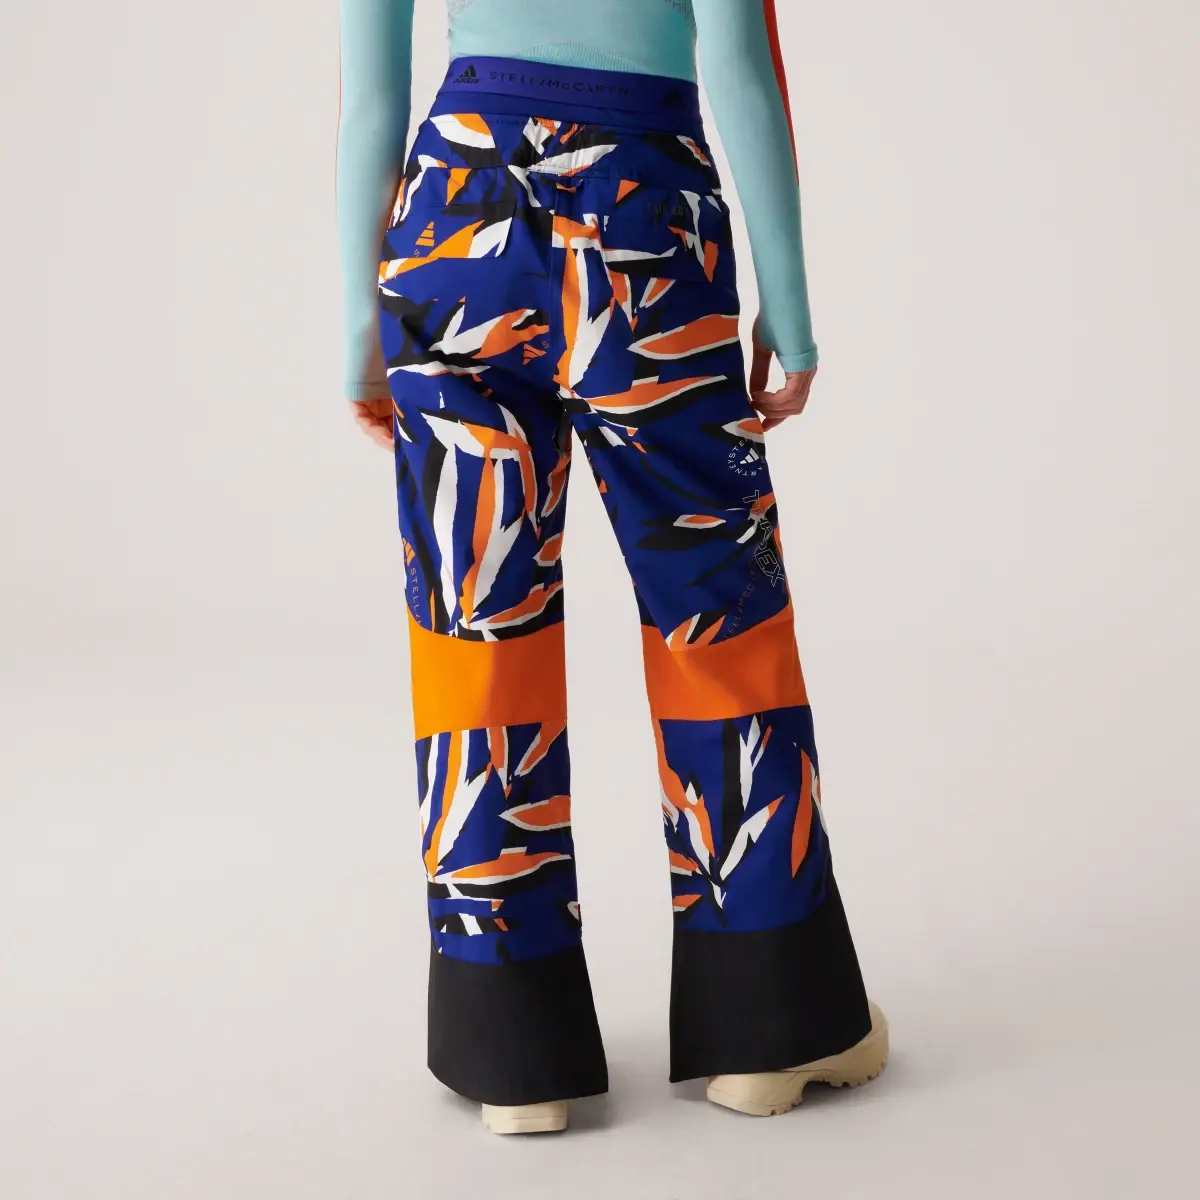 Adidas by Stella McCartney x Terrex TrueNature Pant. 3